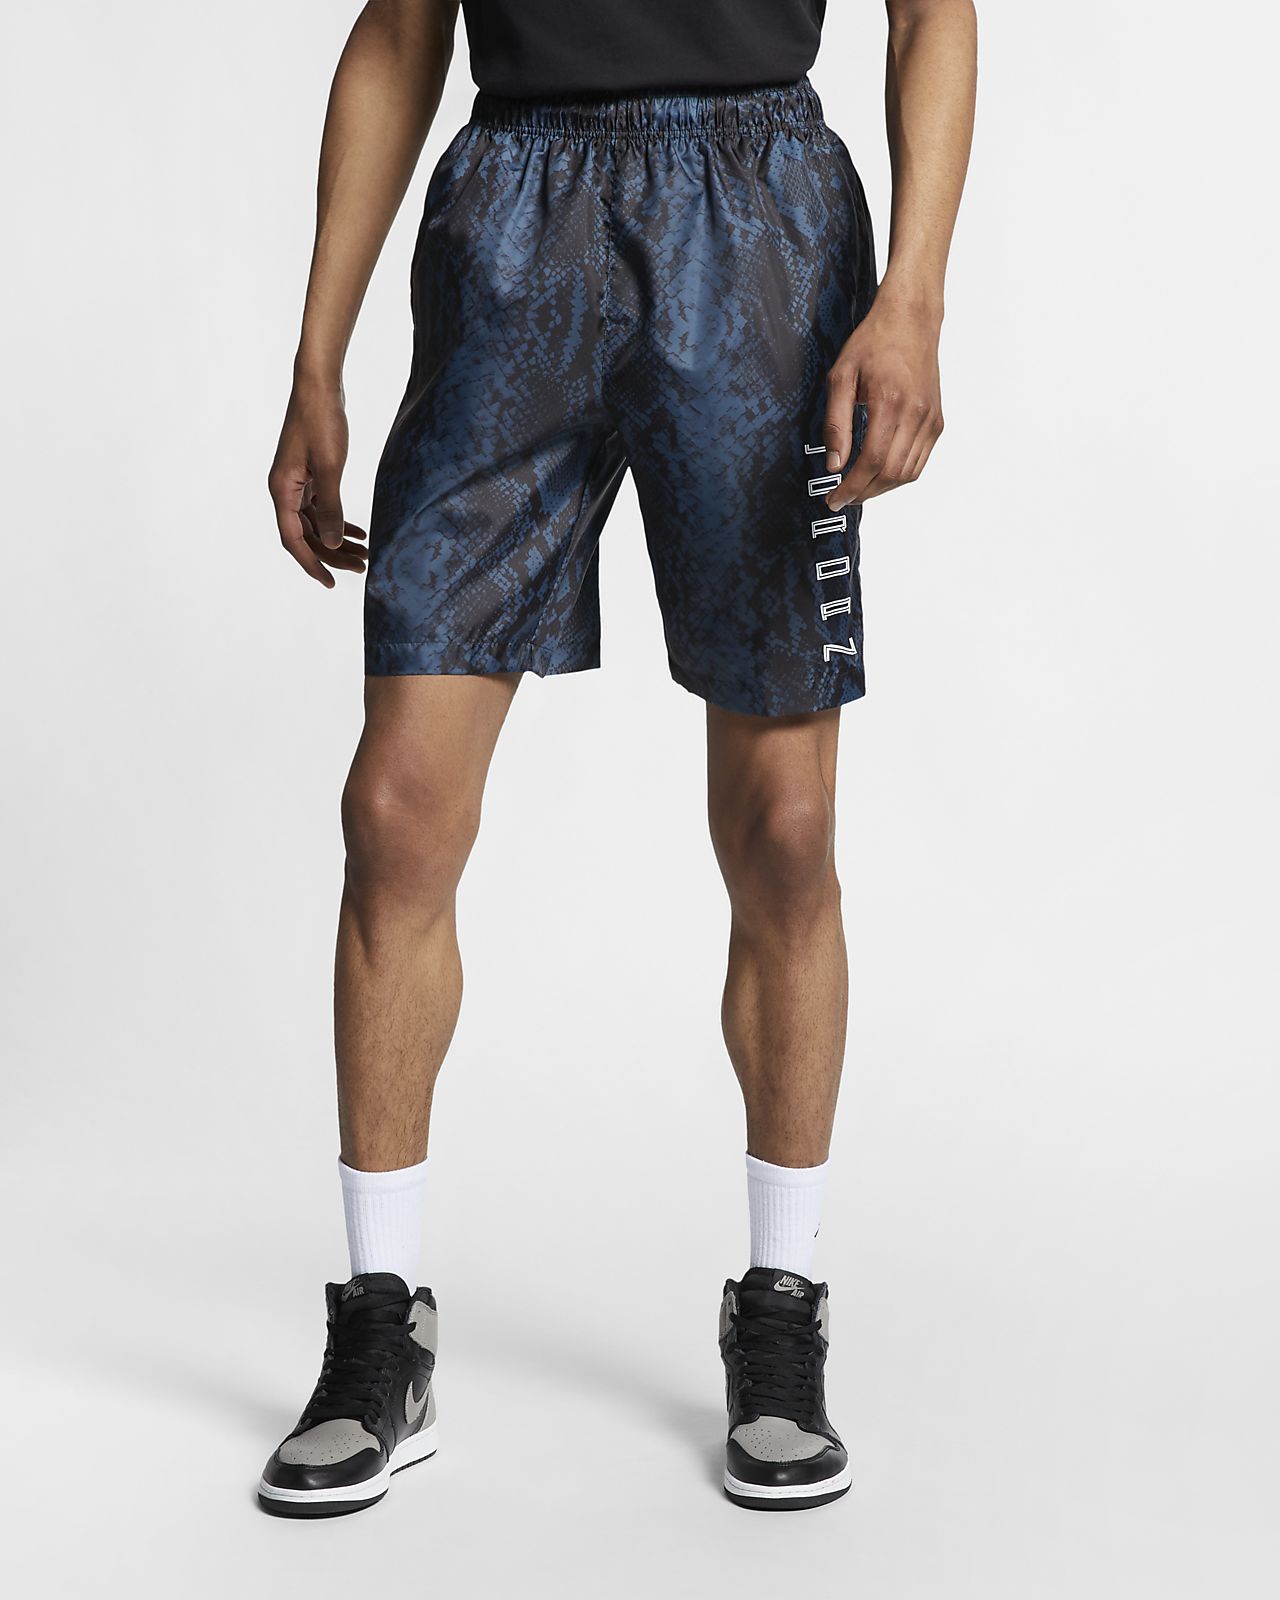 jordan 11s with shorts